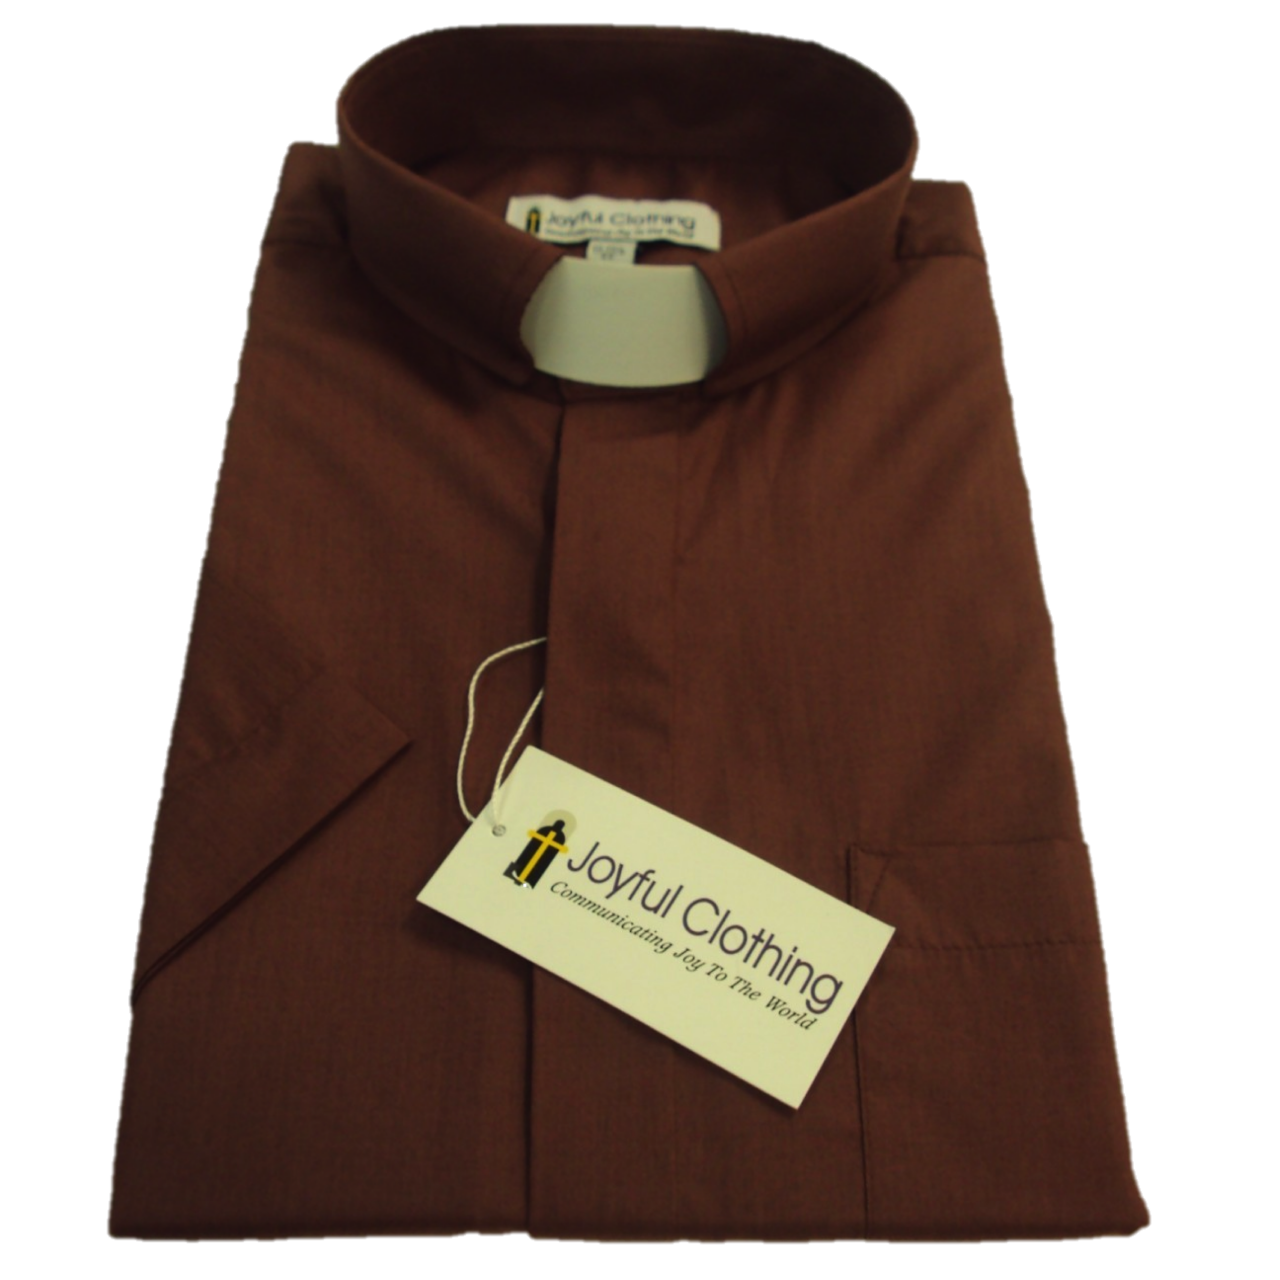 Men's Short-Sleeve Tab-Collar Clergy Shirt - Brown